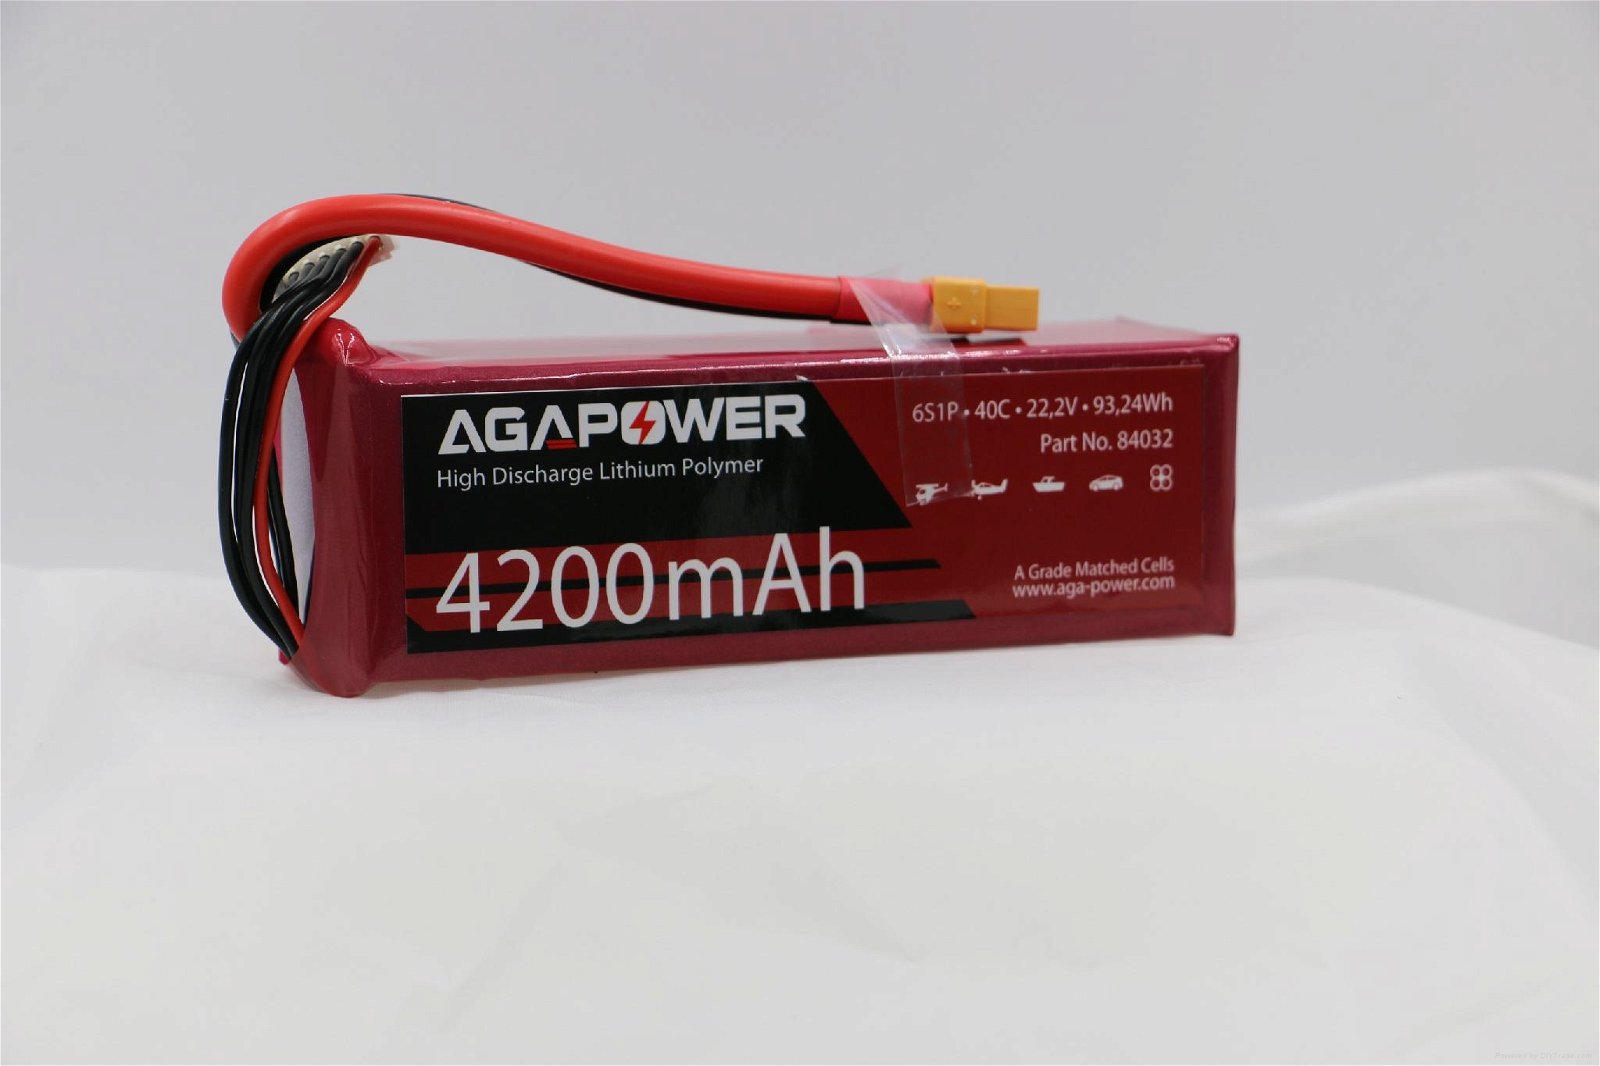 AGA 6S 40C 4200mAh RC heli lipo battery 3